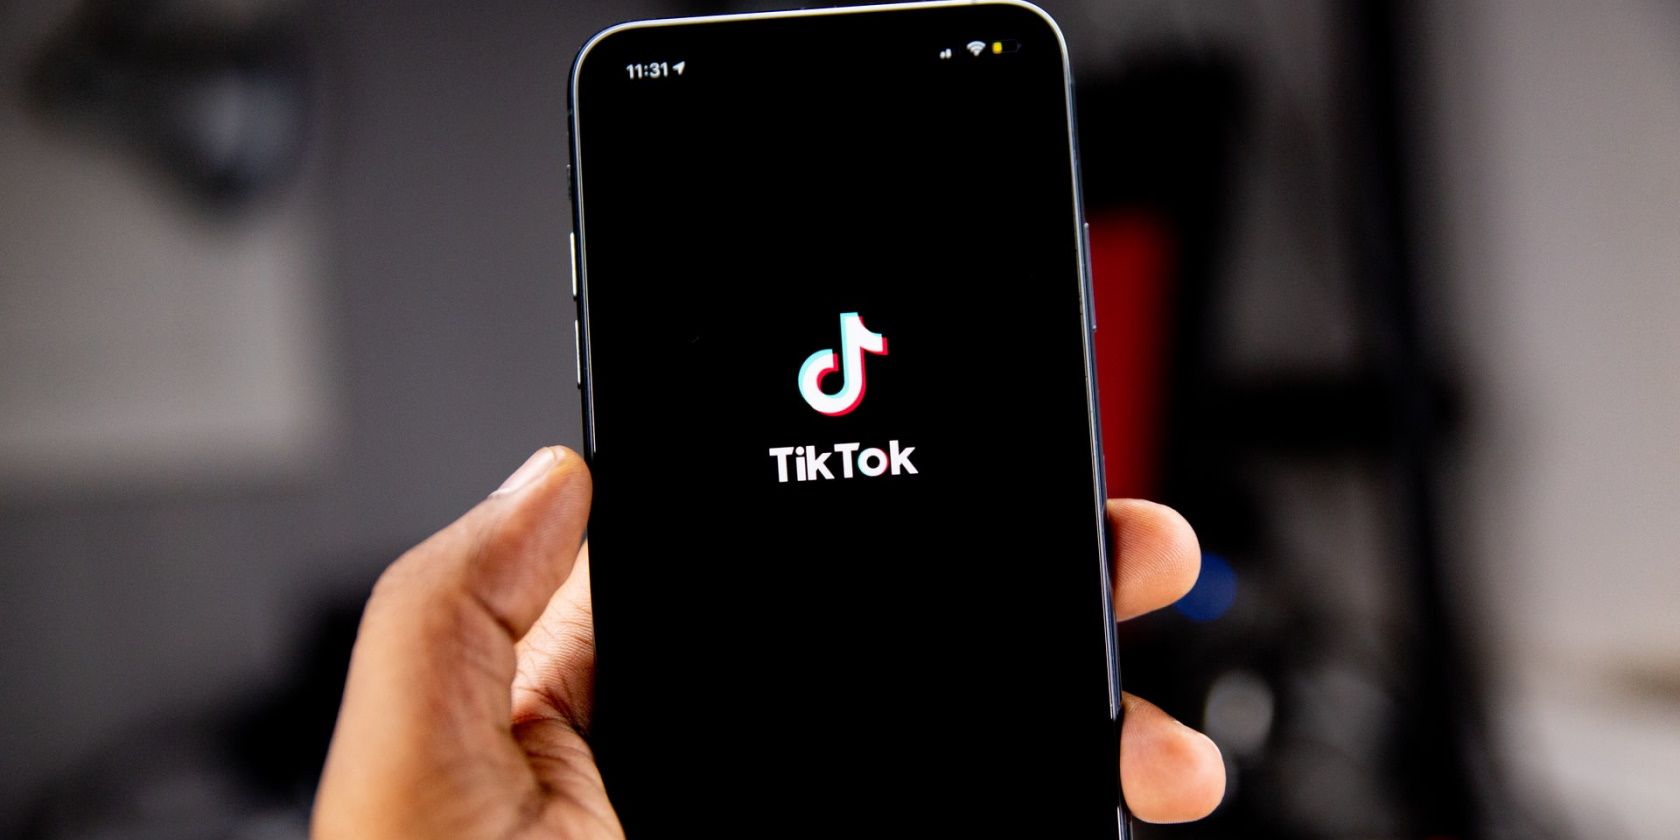 TikTok mobile app launched